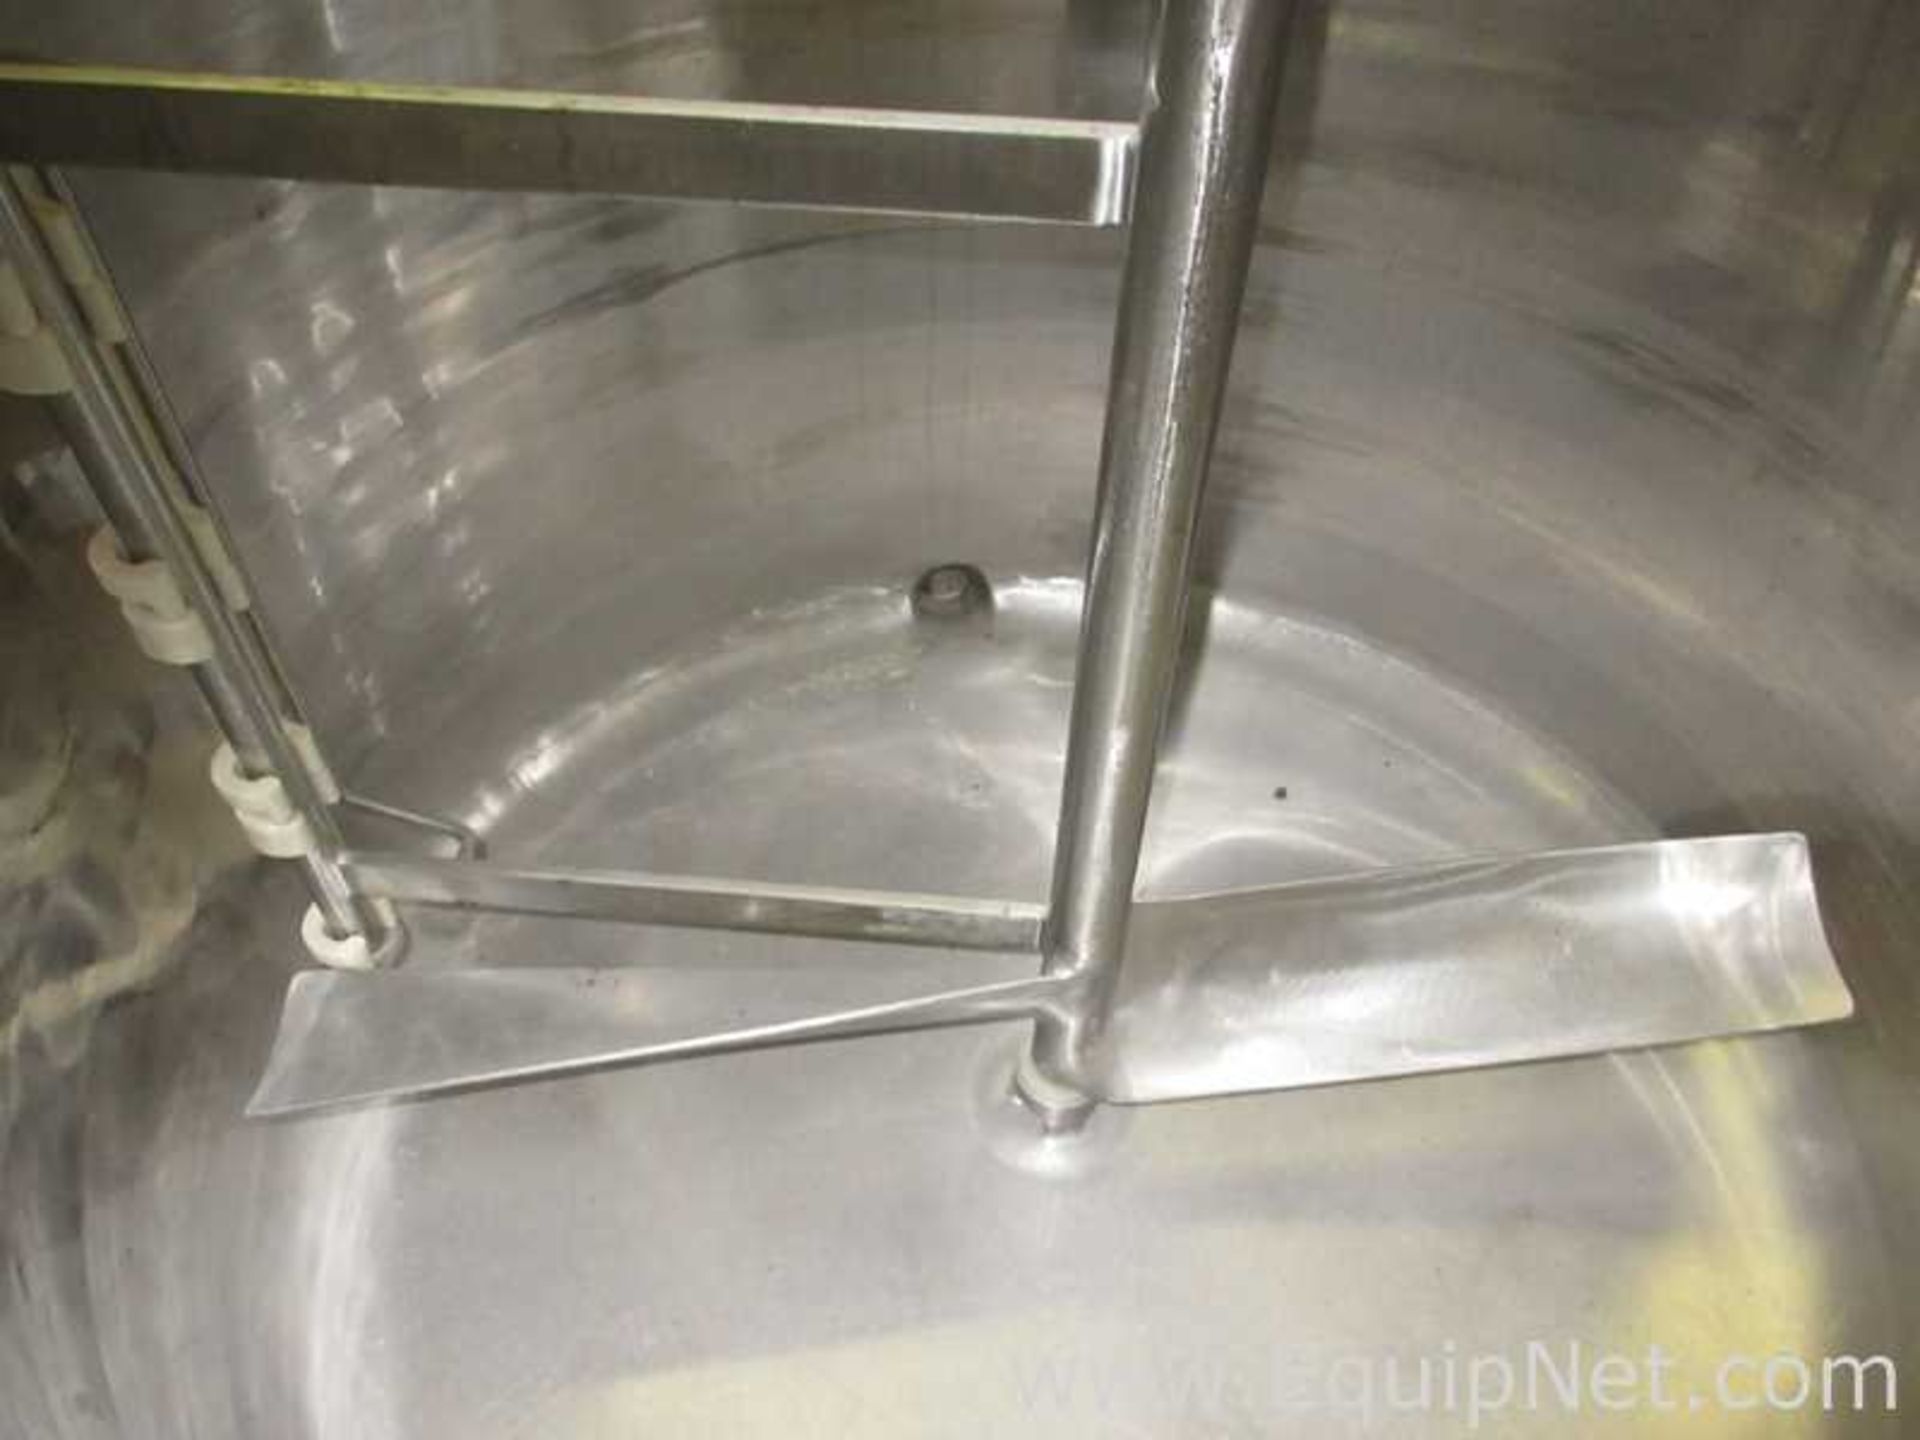 150 Gallon Stainless Steel Mojonnier Kettle With 3 HP Agitator - Image 9 of 14